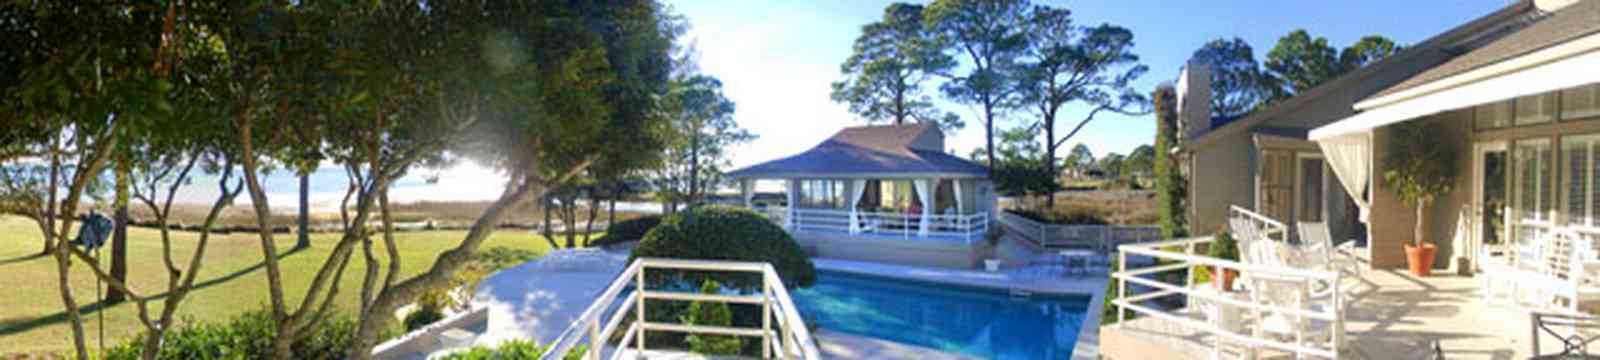 Gulf-Breeze:-Ceylon-Drive_05.jpg:  pool house, swimming pool, pine tree, tiger point subdivision, santa rosa sound